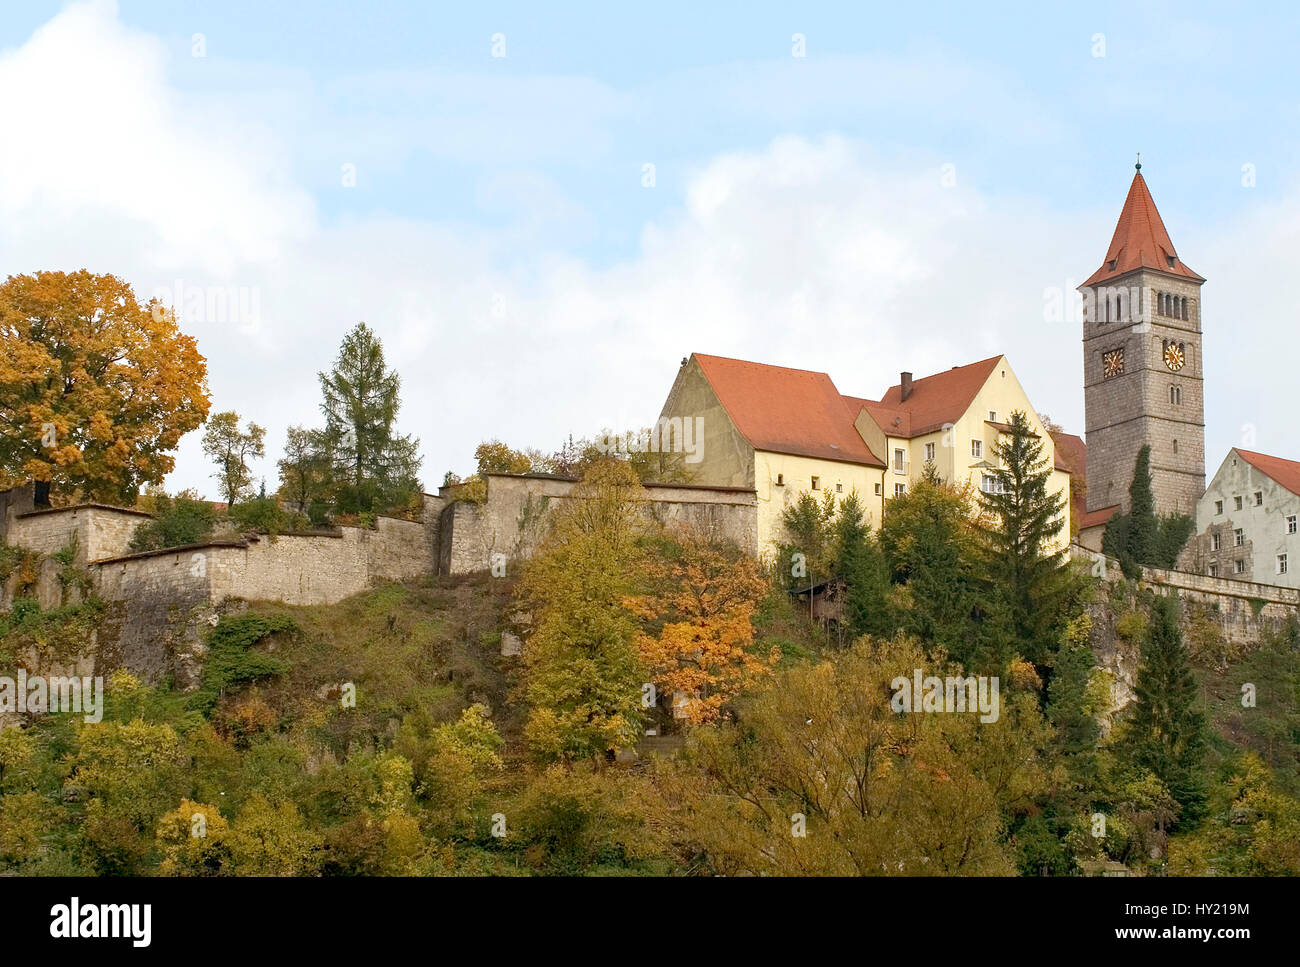 Image of the Castle Monastery in Kastl in the German state of Bavaria.  Blick auf das Klosterschloss Kastl in Bayern, Deutschland. Stock Photo